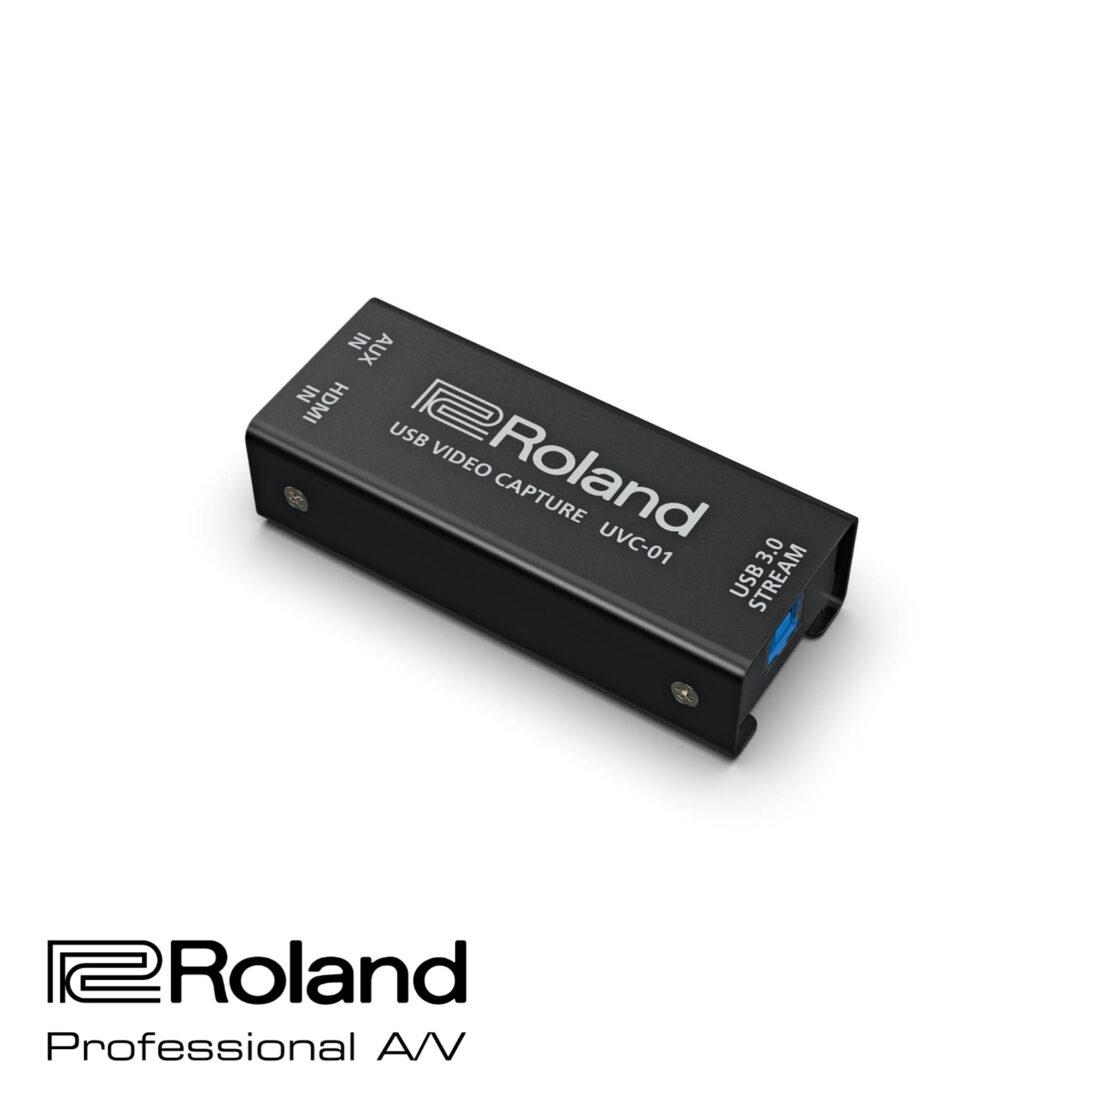 Roland UVC-01 video capture